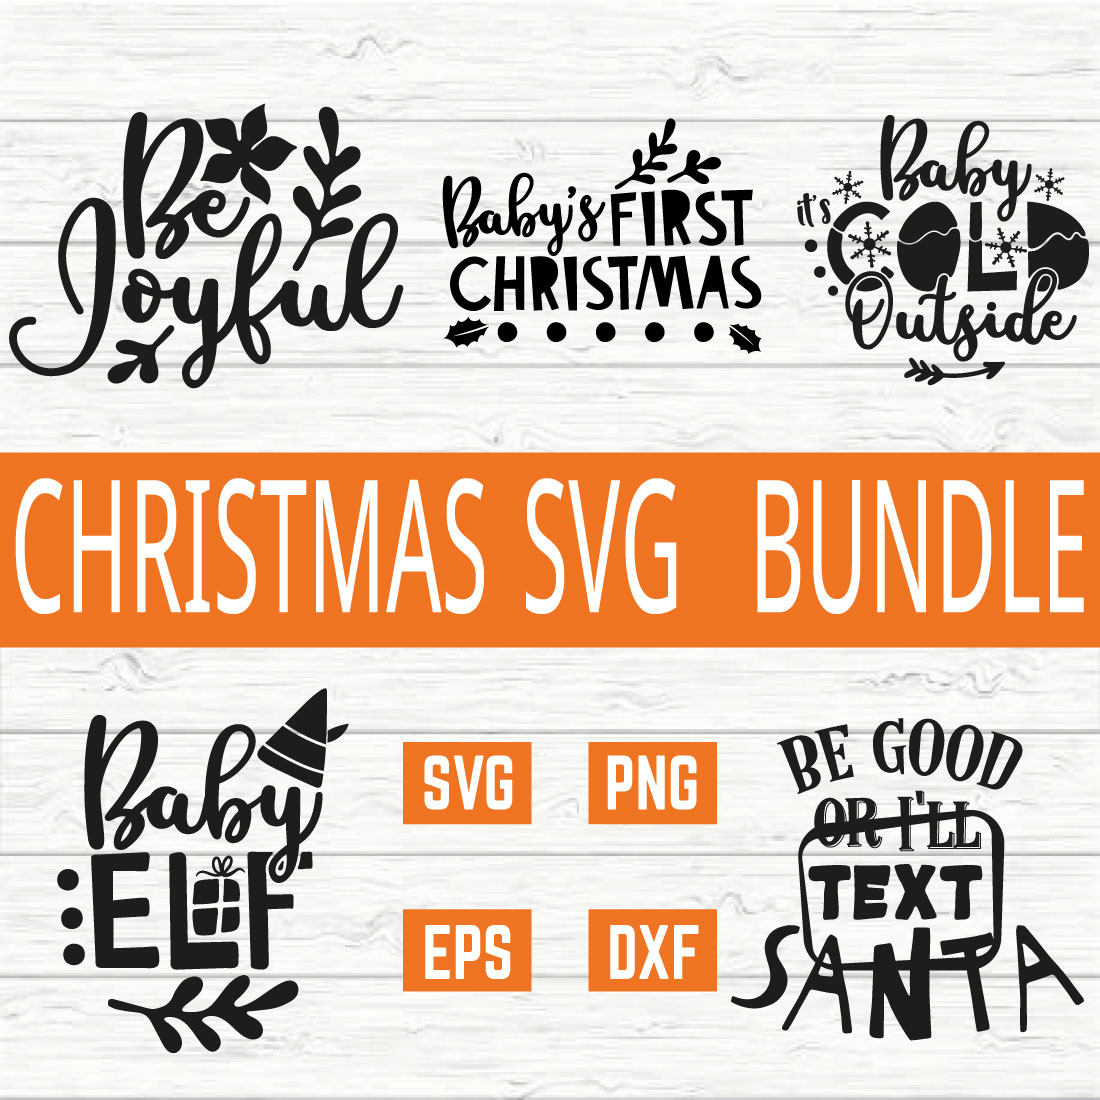 Christmas Svg Bundle vol 2 preview image.